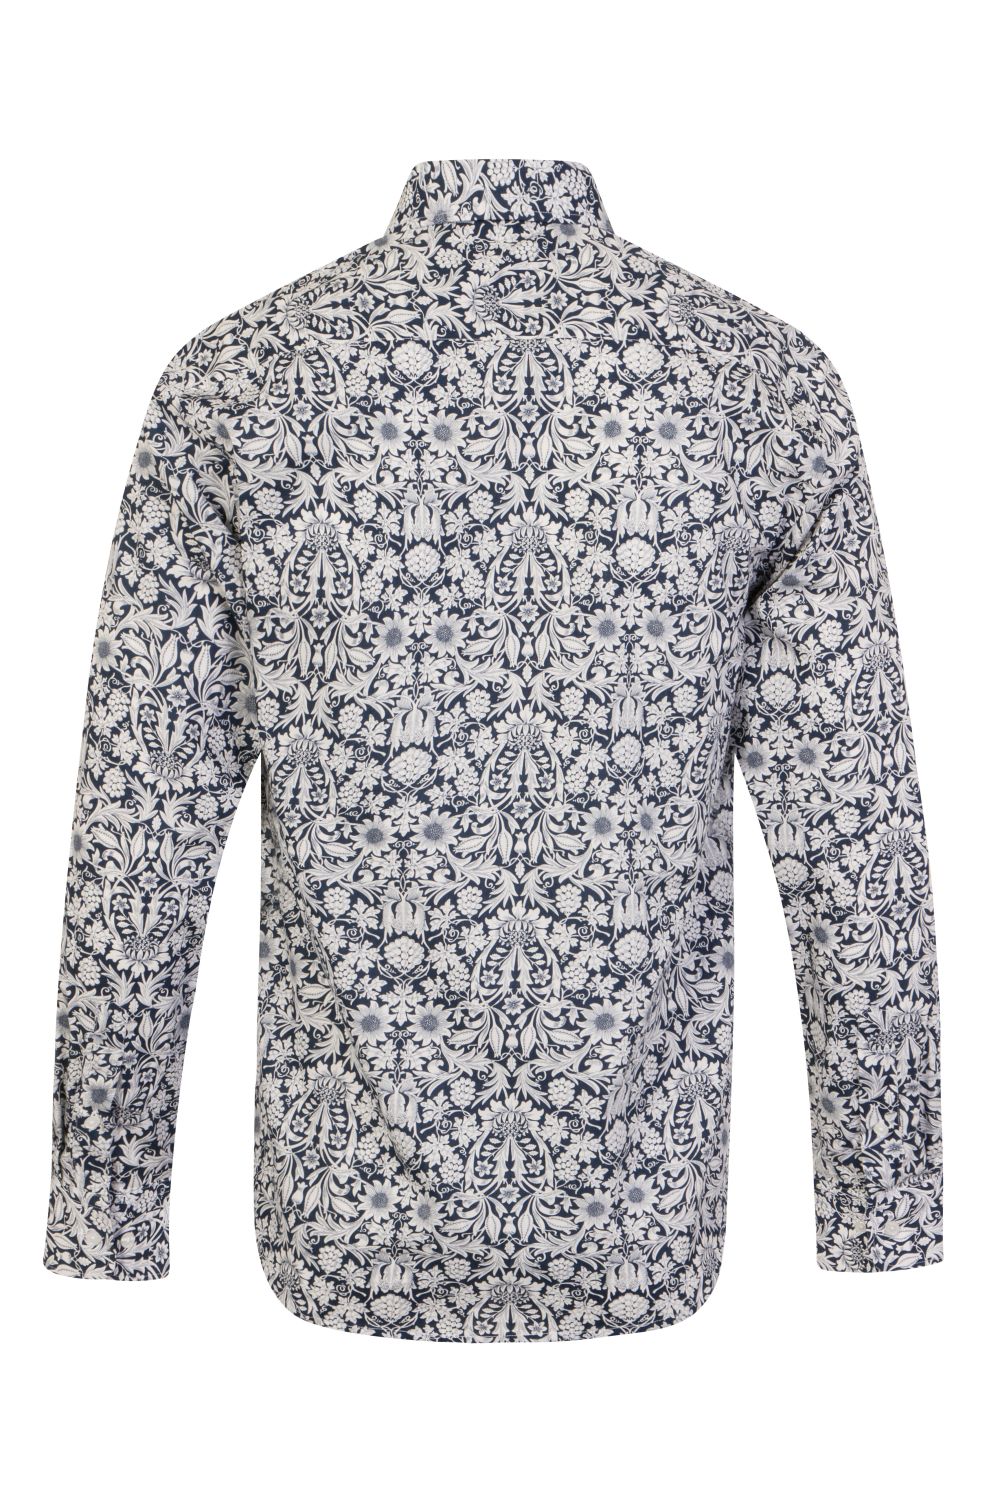 Floral Blue & White Regular Fit 100% Cotton Shirt